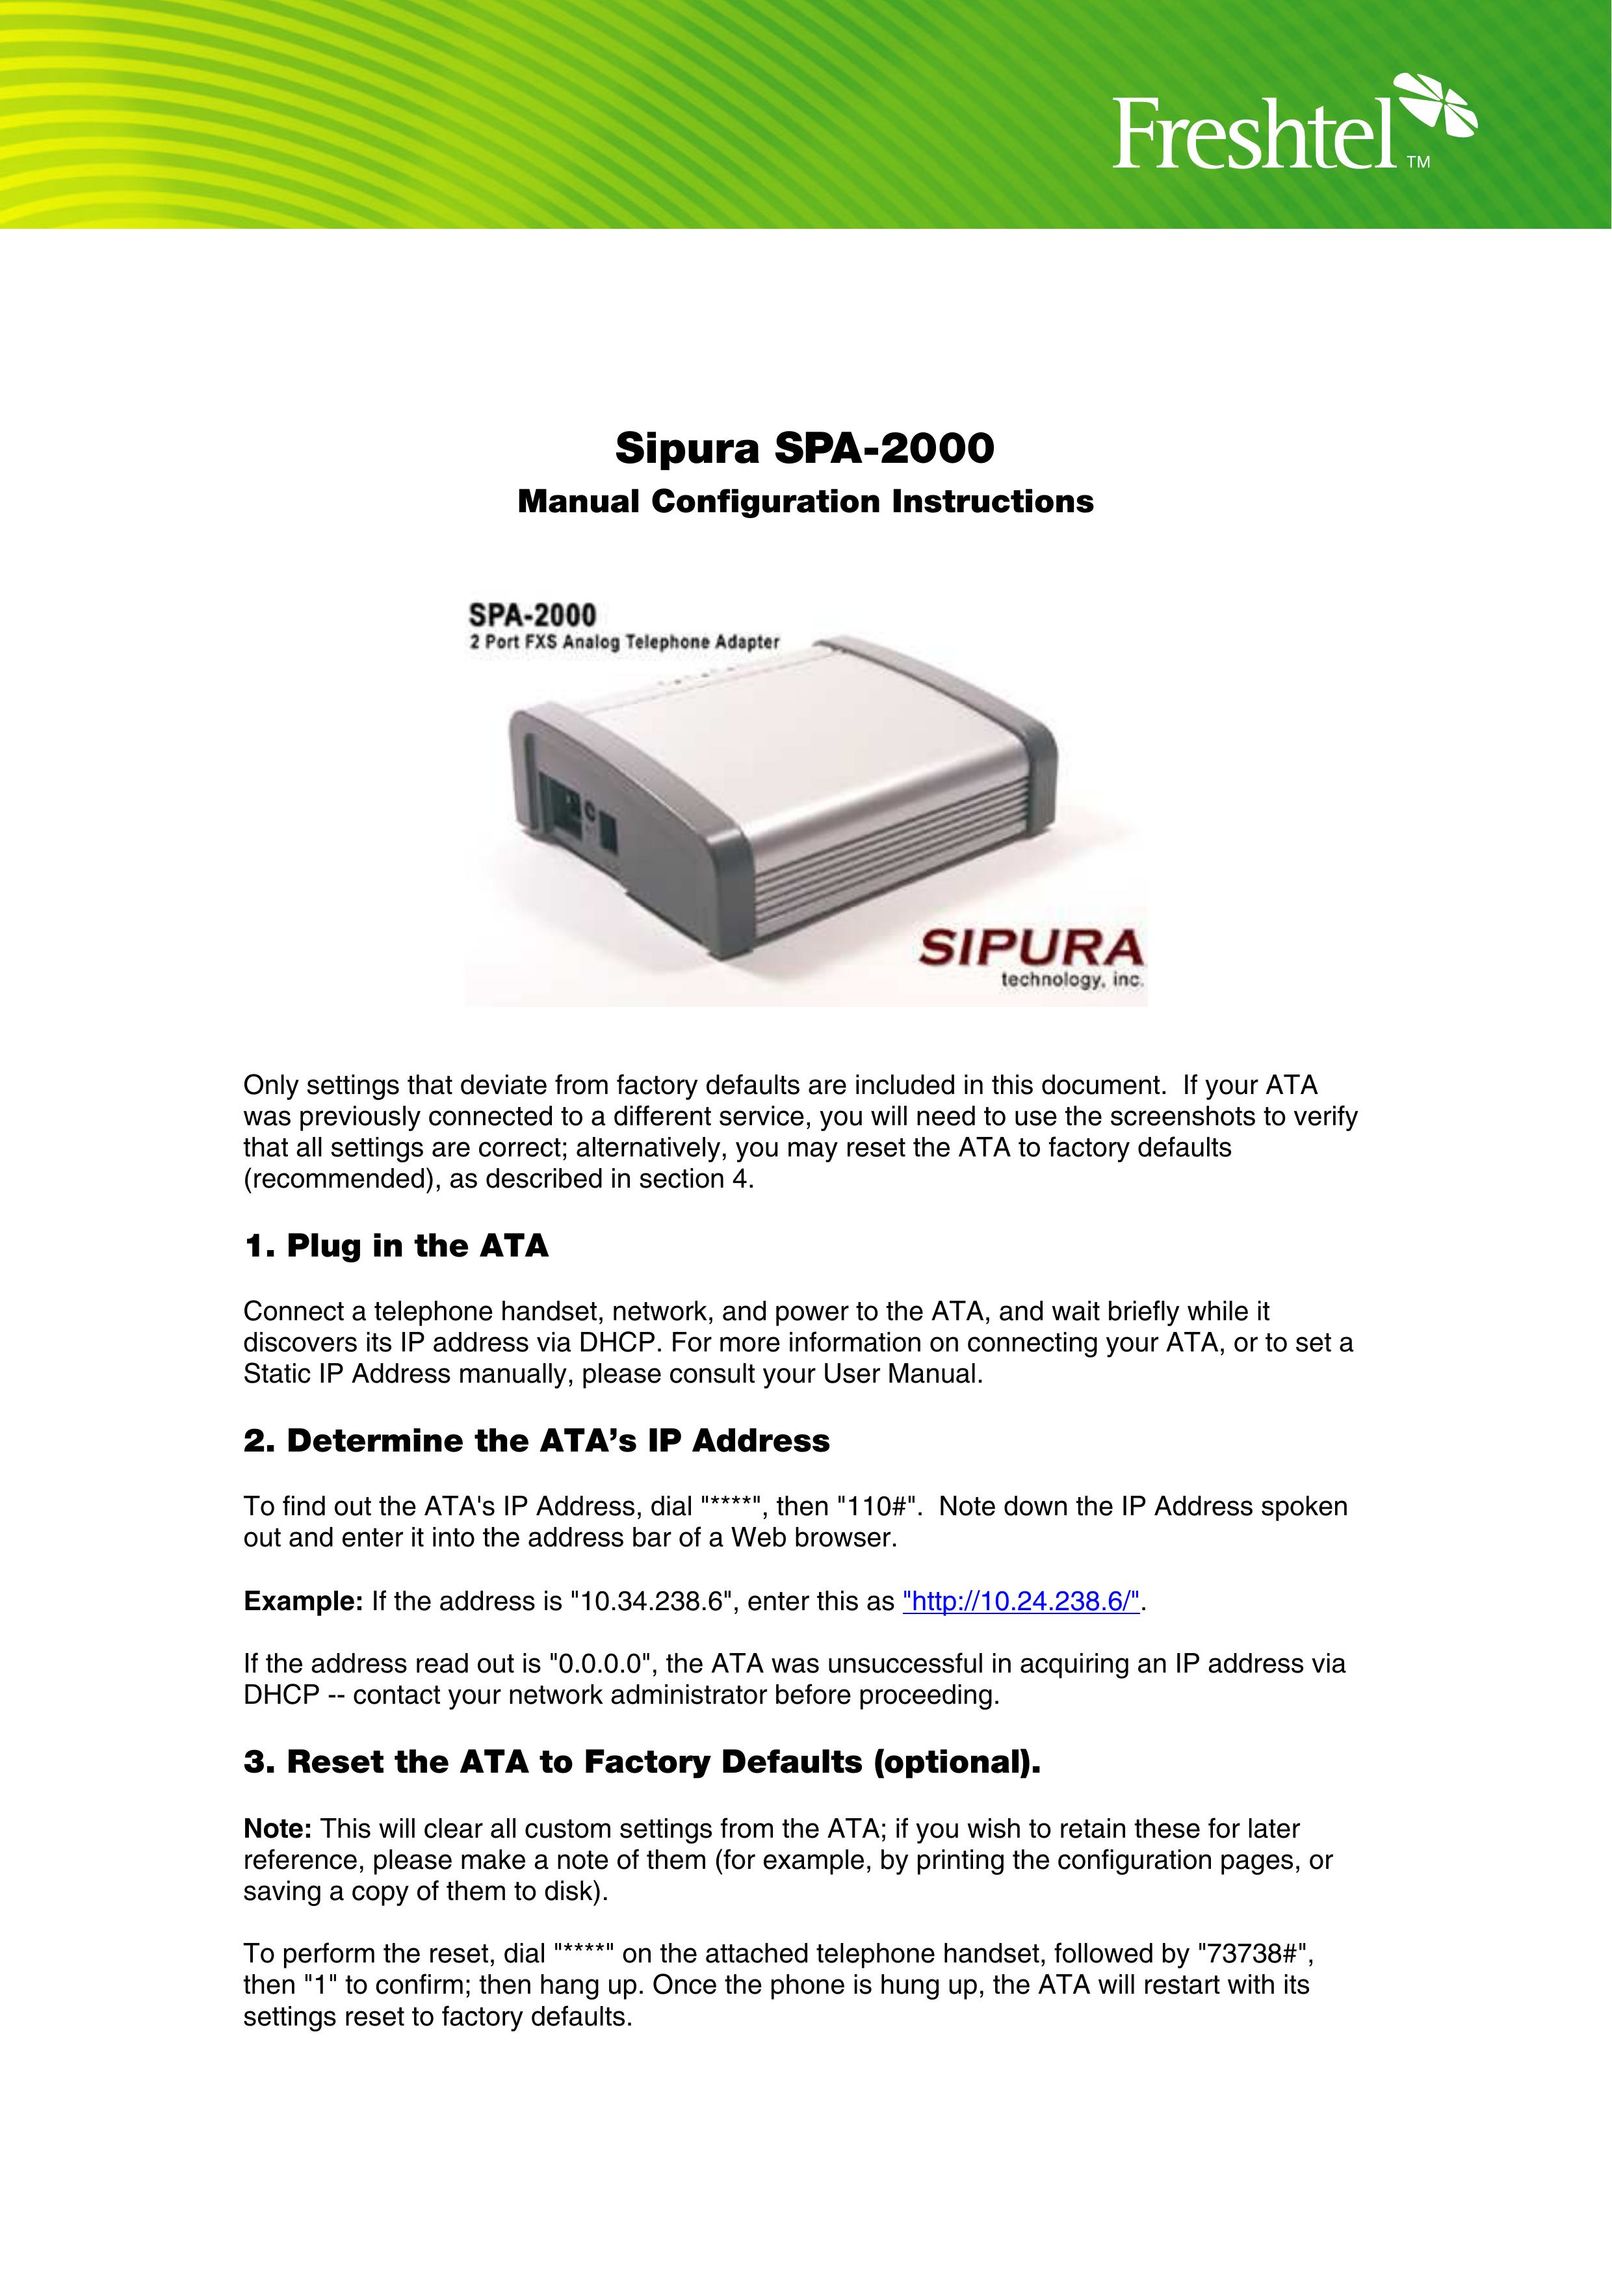 Freshtel SPA-2000 Telephone Accessories User Manual